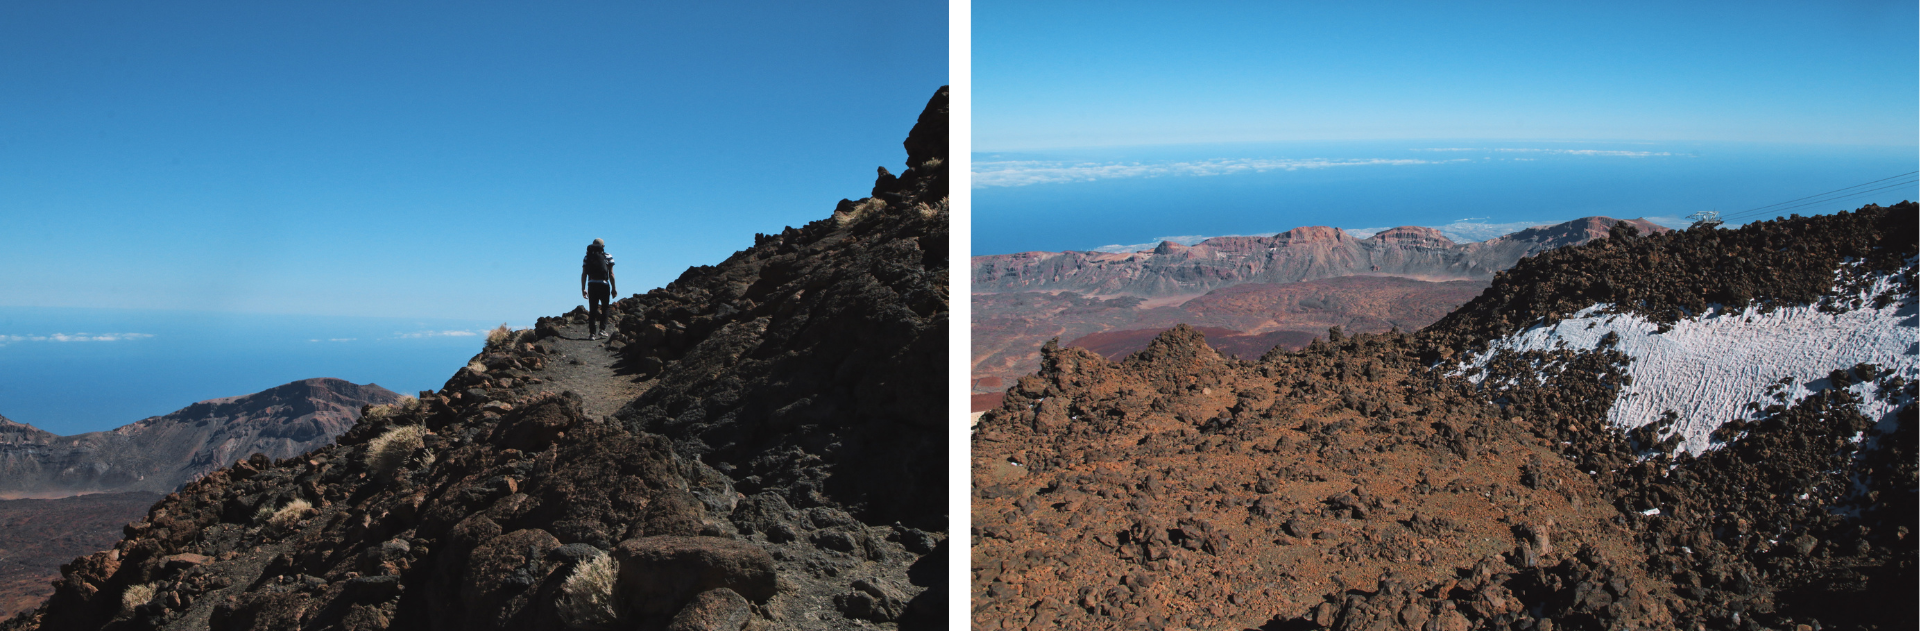 Pico del Teide Tenerife